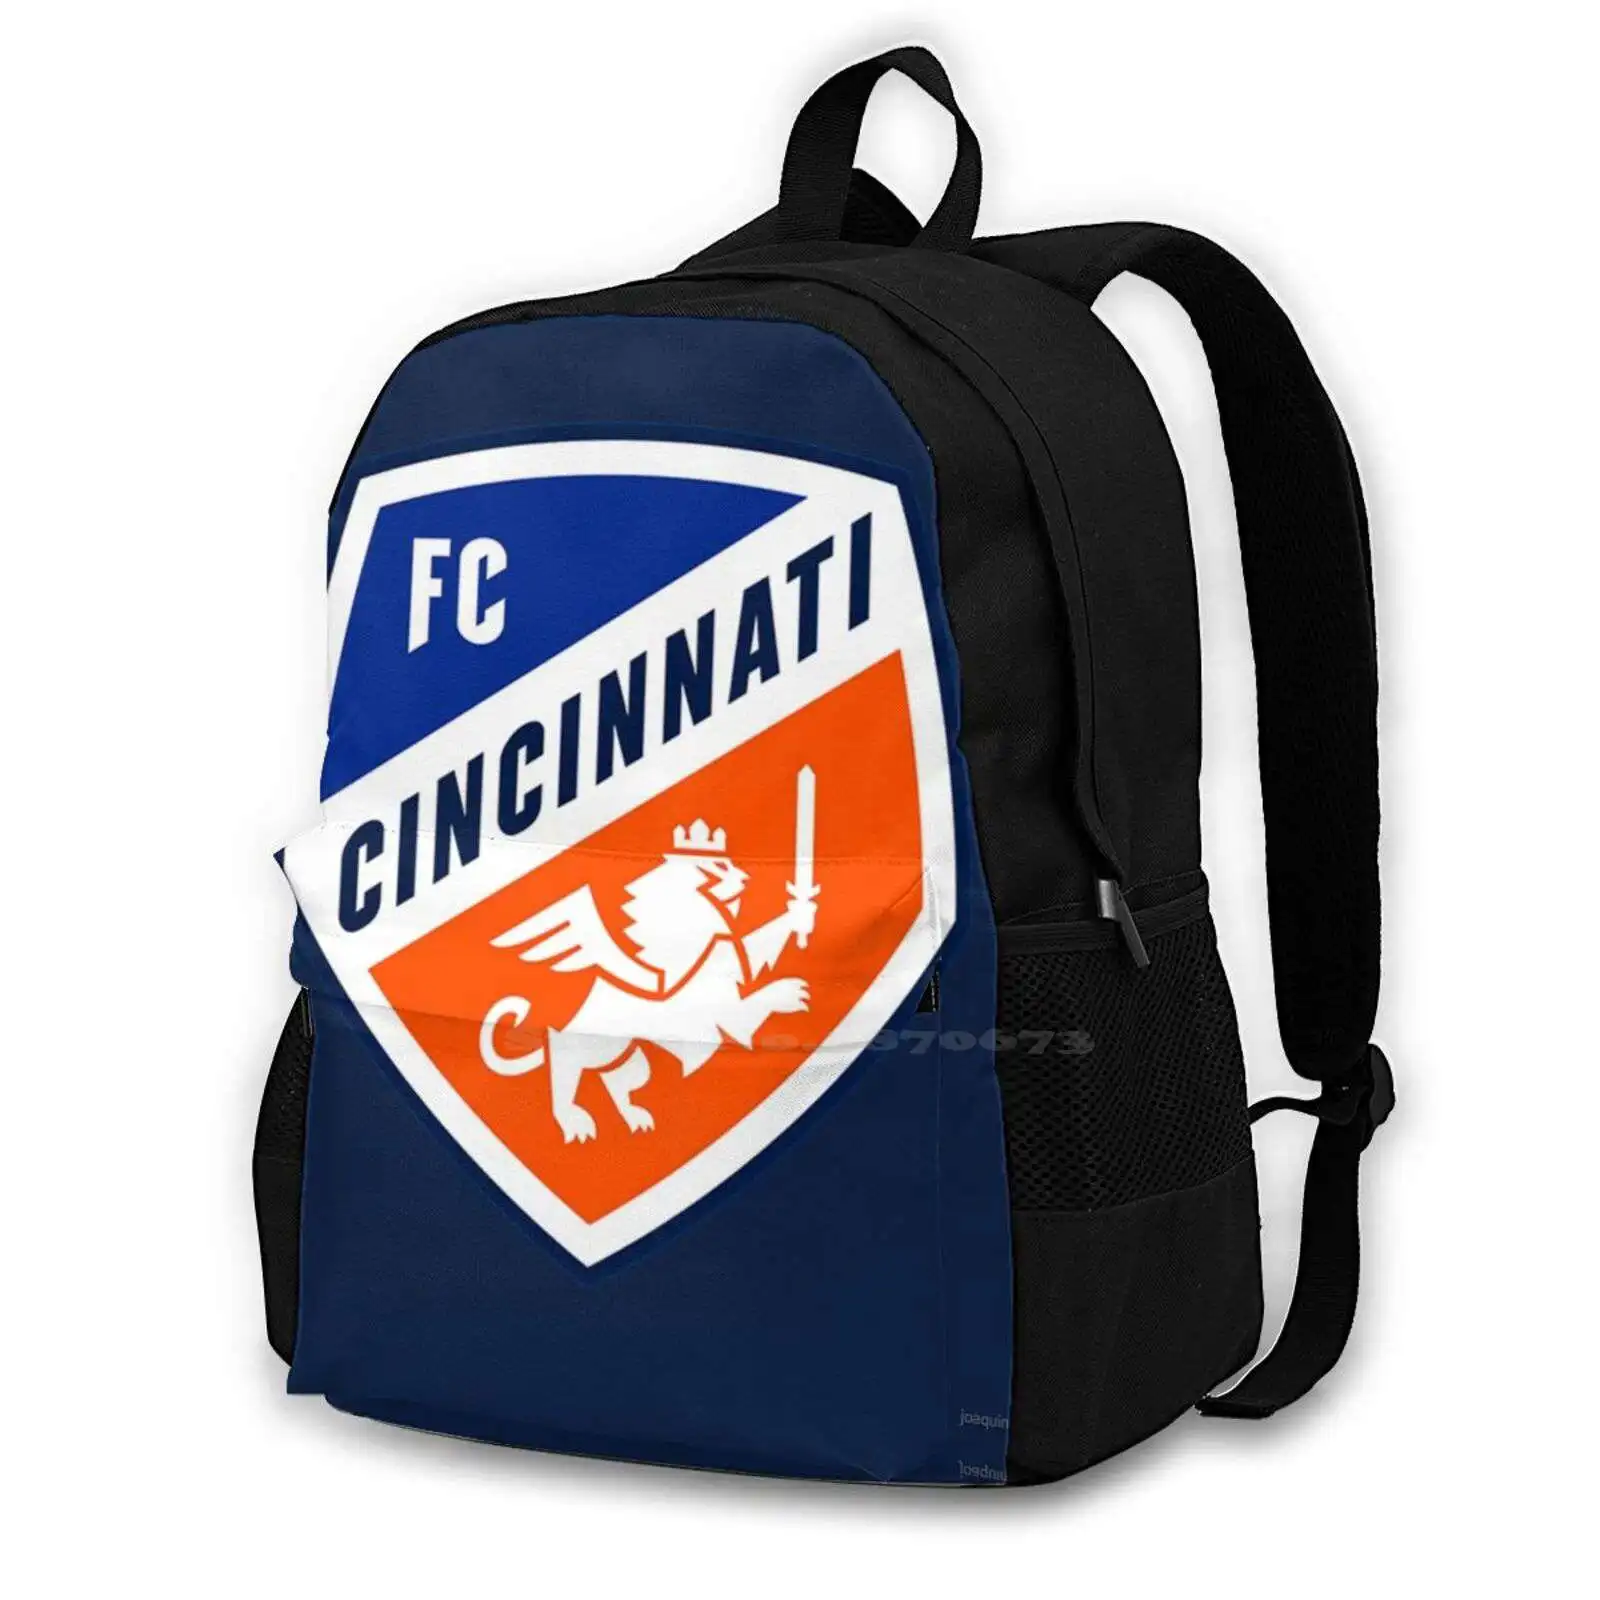 

Fc Cincinnati Badge (Dark Blue) Teen College Student Backpack Laptop Travel Bags Cincinnati Mls Major Soccer Football Uses